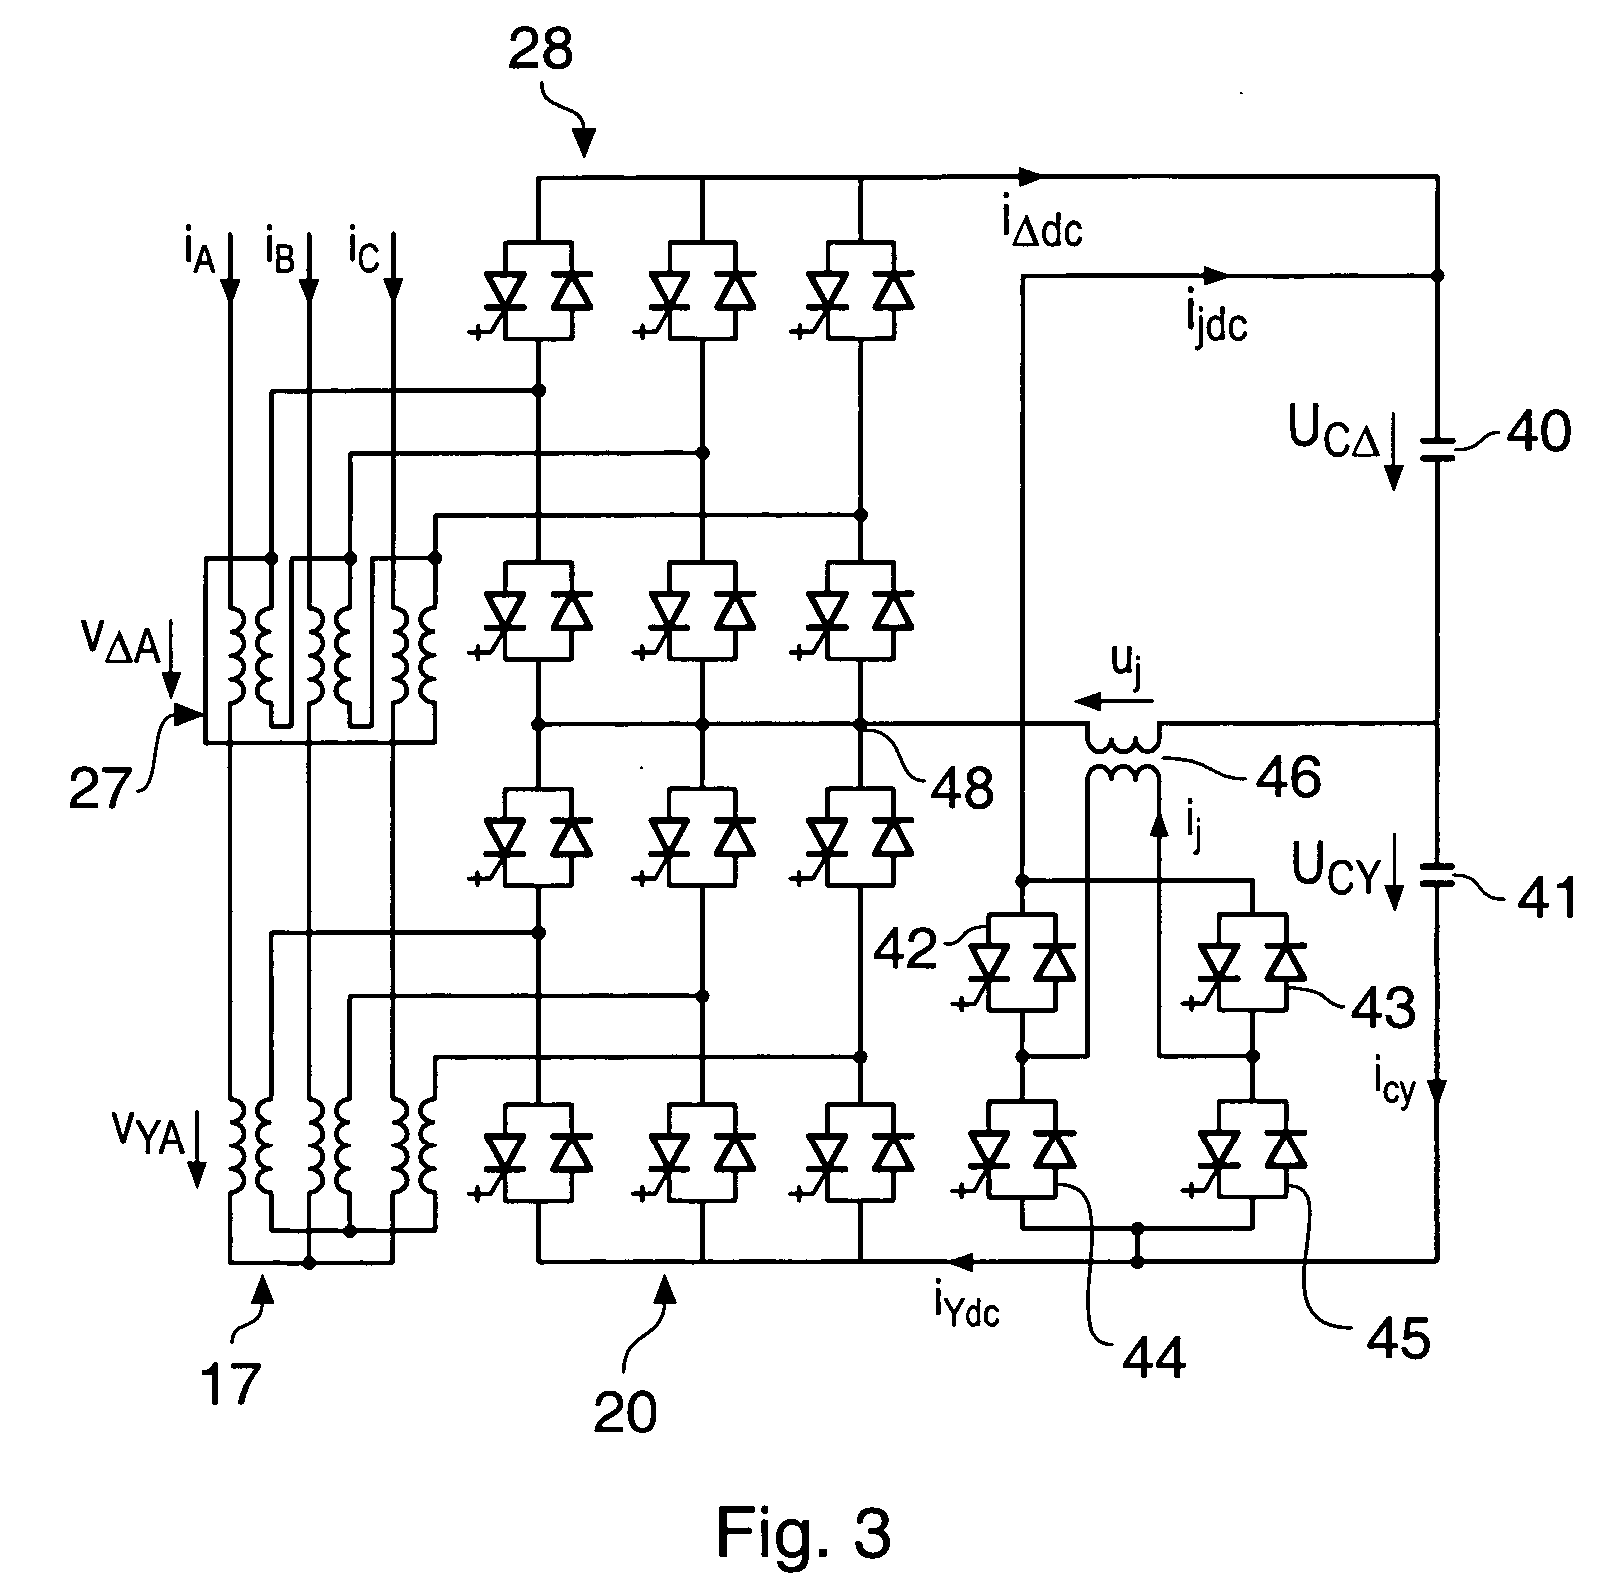 Multi-pulse converter circuits